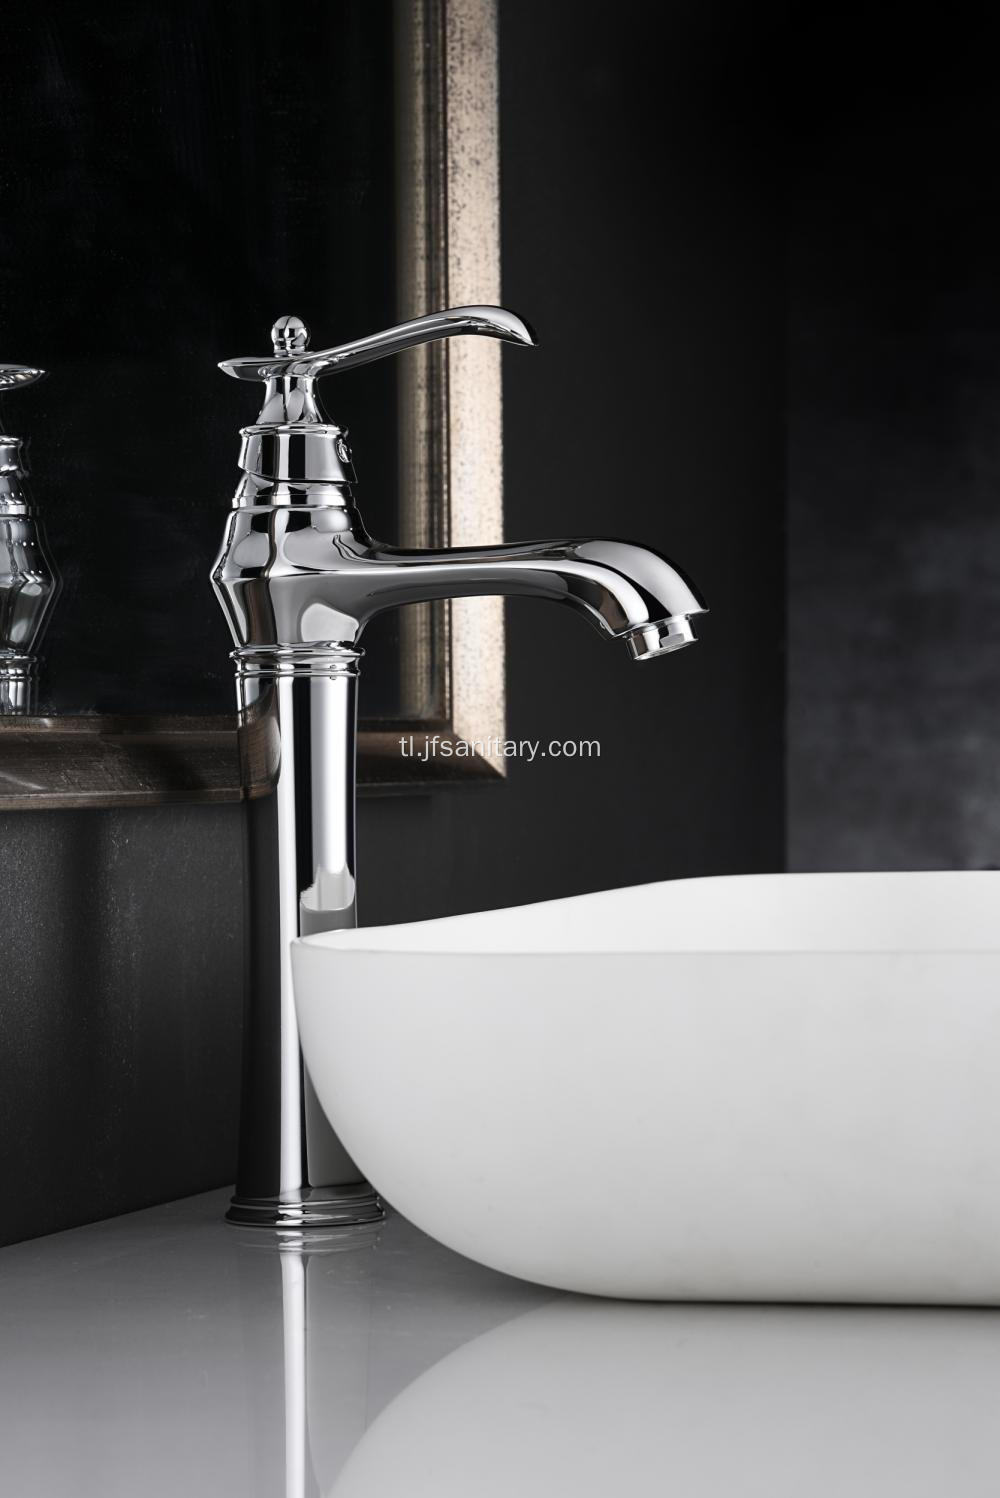 Chrome single pever vintage basin faucet tall.